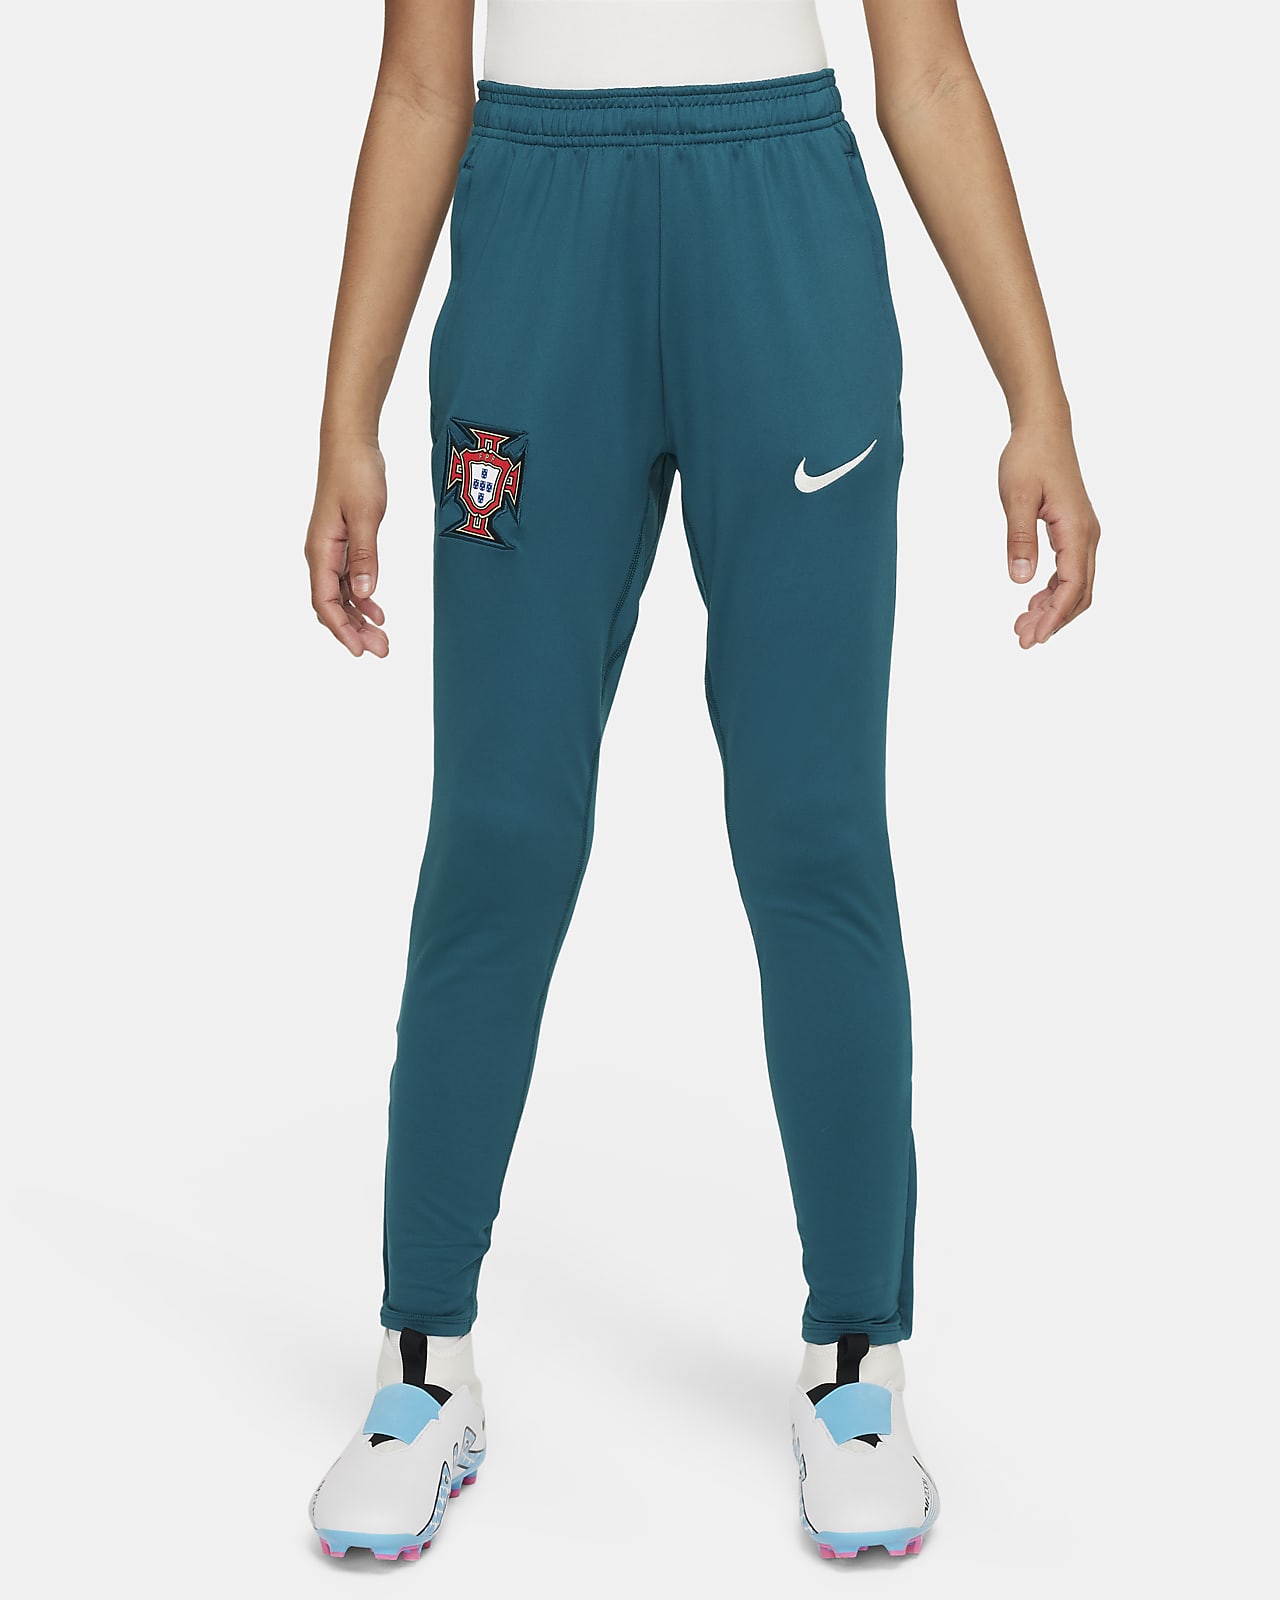 Portugal Strike Pantalons de futbol de teixit Knit Nike Dri-FIT - Nen/a